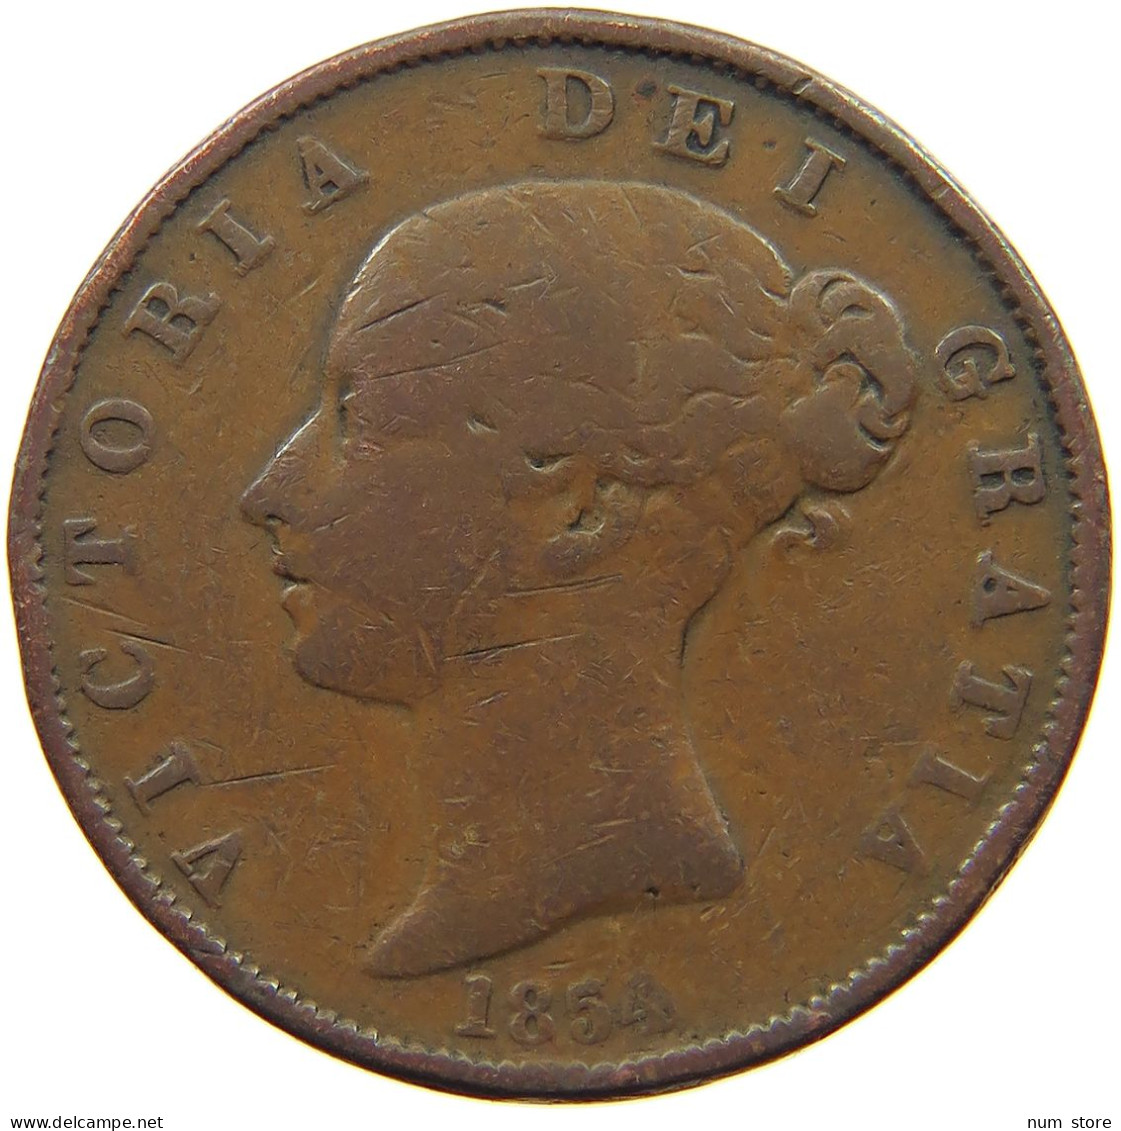 GREAT BRITAIN HALFPENNY 1854 Victoria 1837-1901 #a095 0235 - C. 1/2 Penny